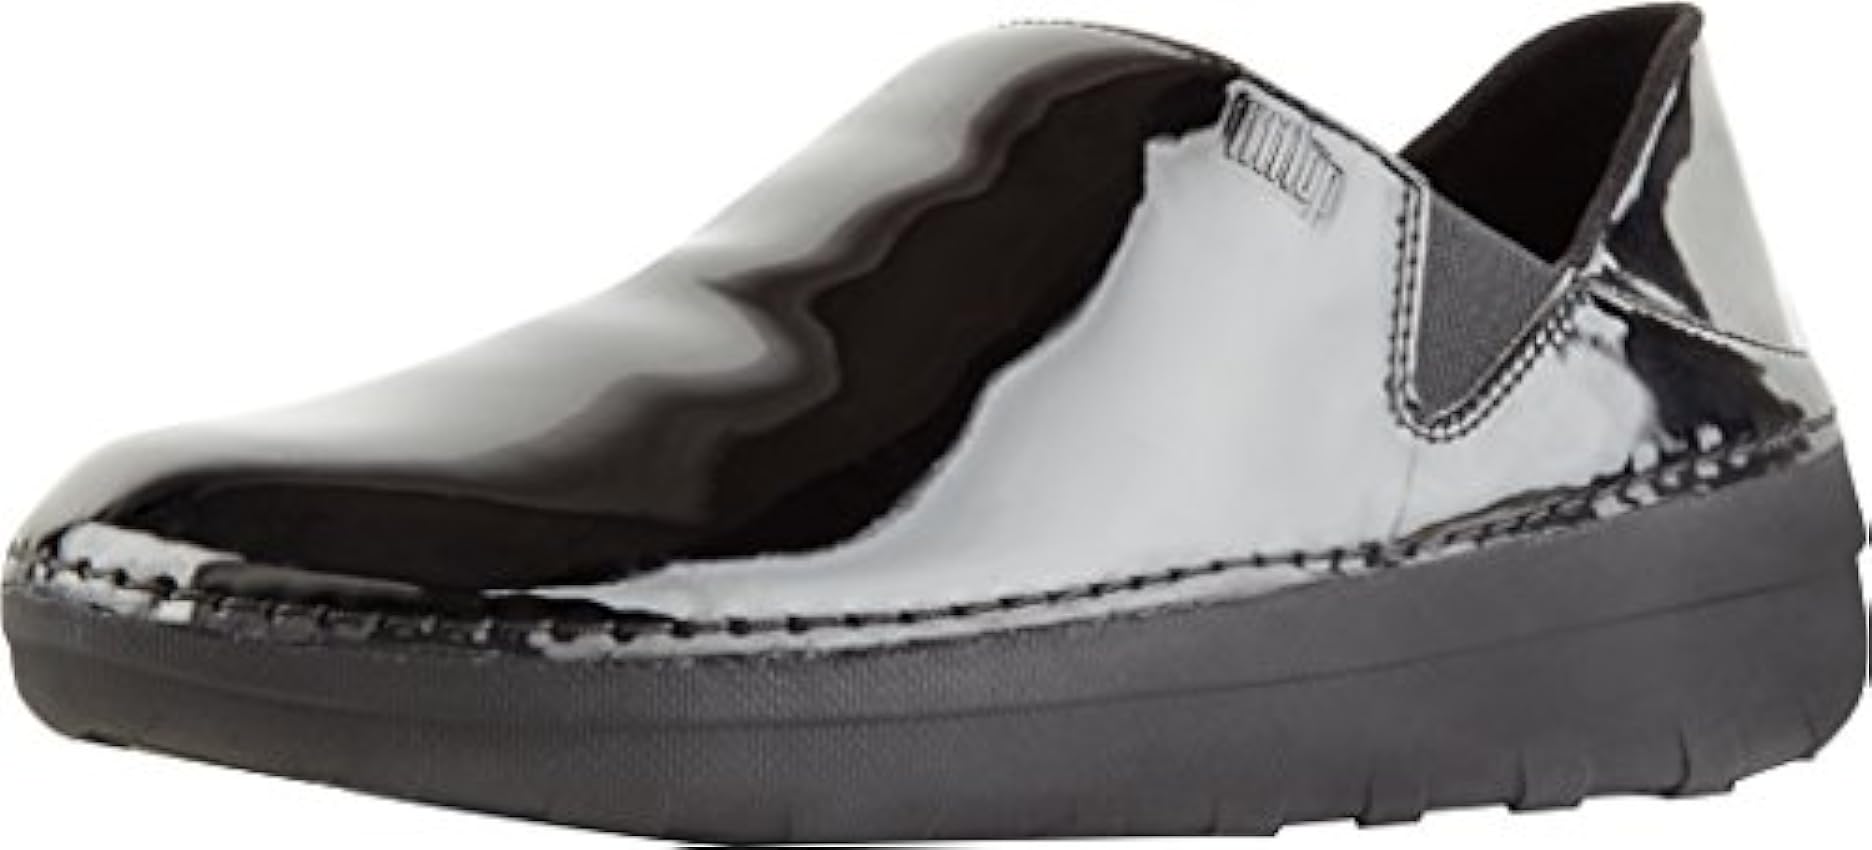 Fitflop Superloafer-Patent, Sneaker Mujer, 36 EU c1tsO5